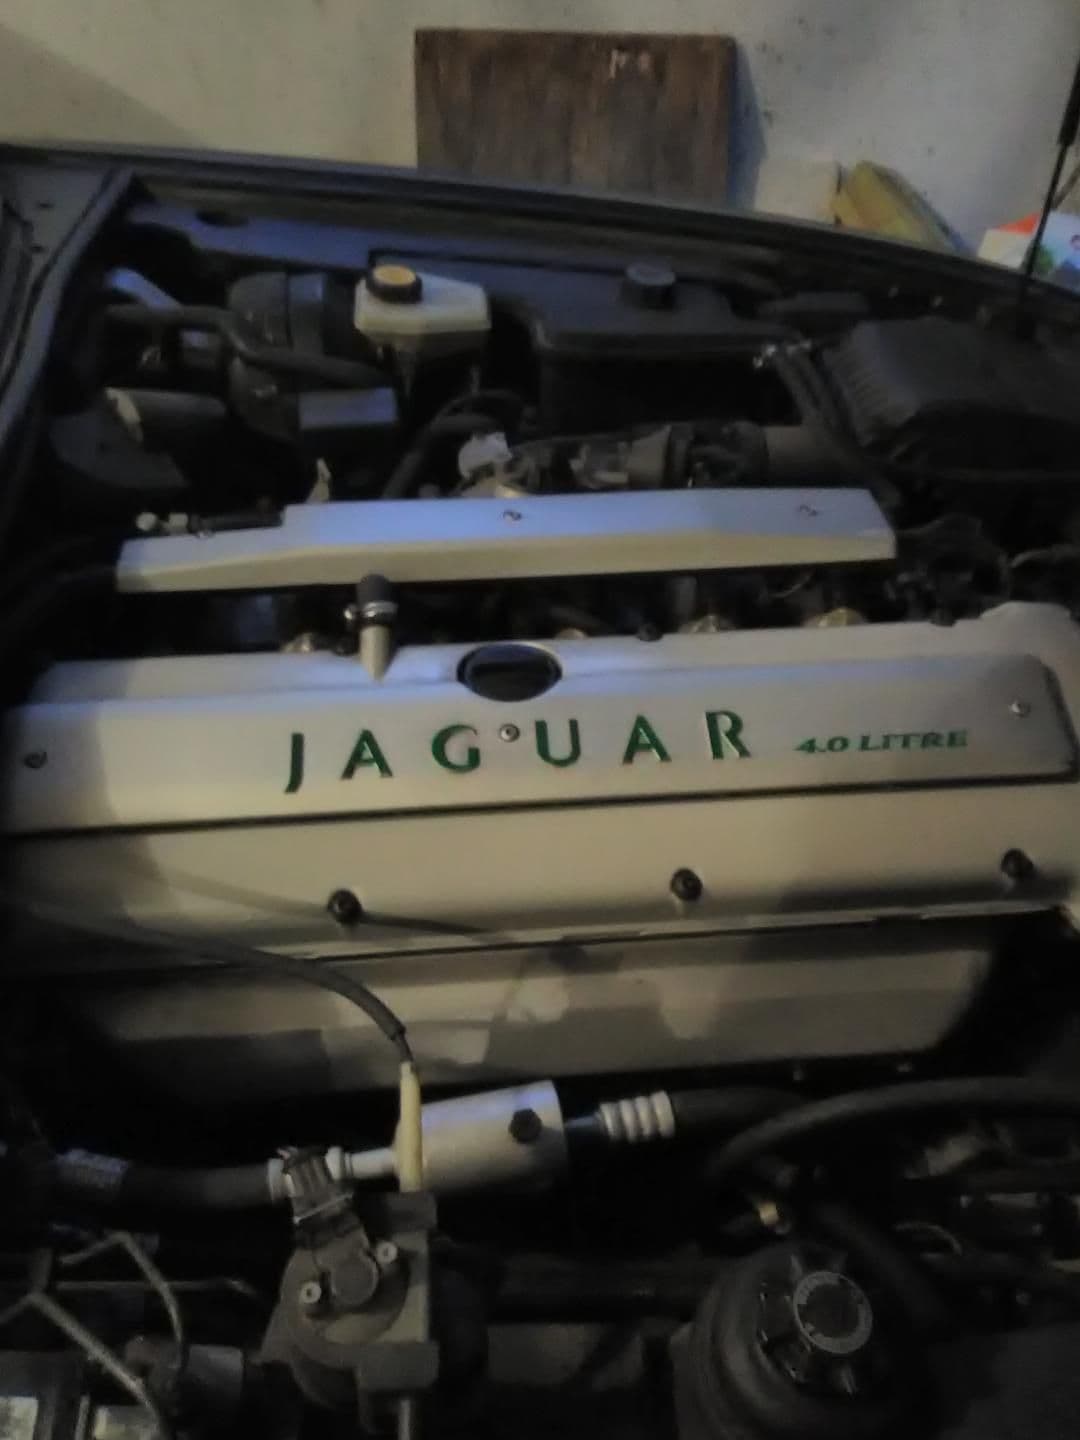 1996 Jaguar Vanden Plas - 1996 Jaguar Vanden Plas - Used - VIN SAJKX6244TC776420 - 89,000 Miles - 6 cyl - 2WD - Automatic - Sedan - Blue - Bucks County, PA 18942, United States